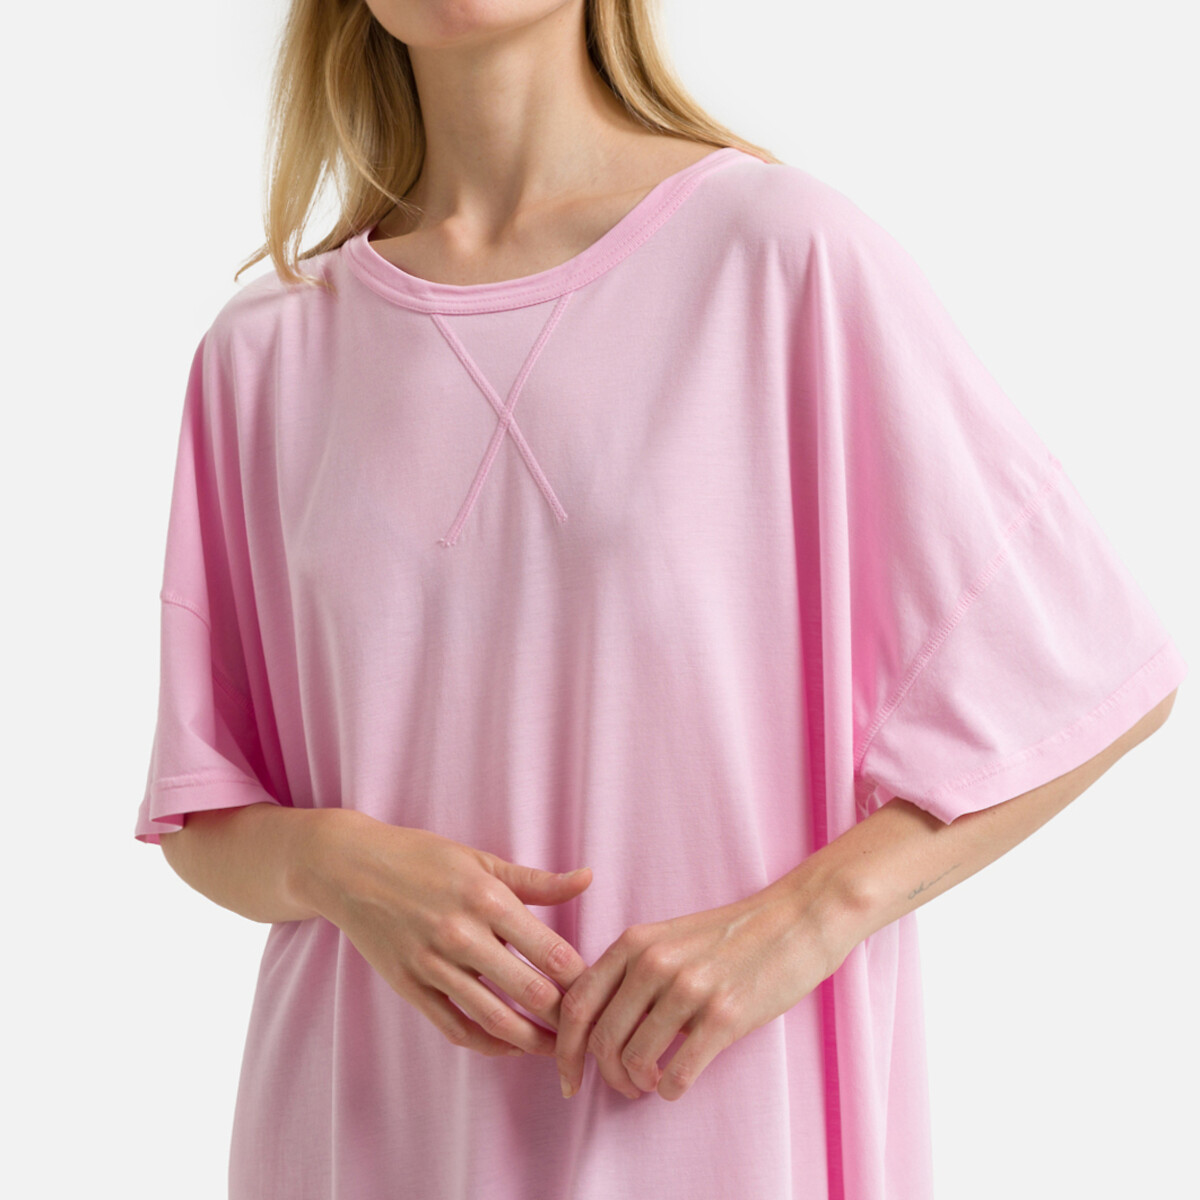 Прямое Платье-майка короткие рукава TUKYBAY XS/S розовый LaRedoute, размер XS/S Прямое Платье-майка короткие рукава TUKYBAY XS/S розовый - фото 3